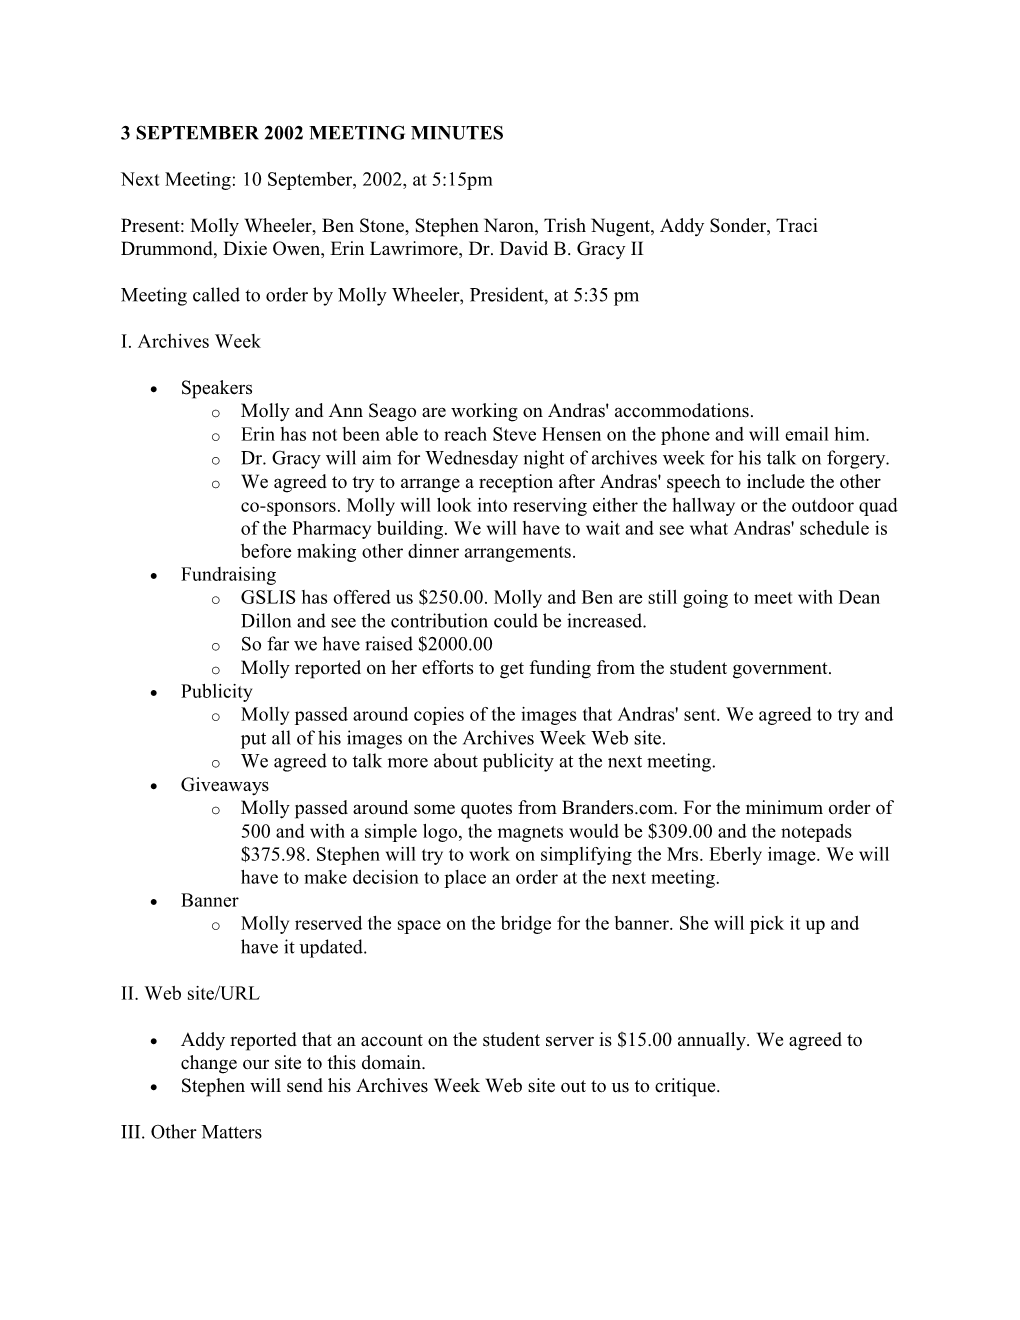 3 September 2002 Meeting Minutes